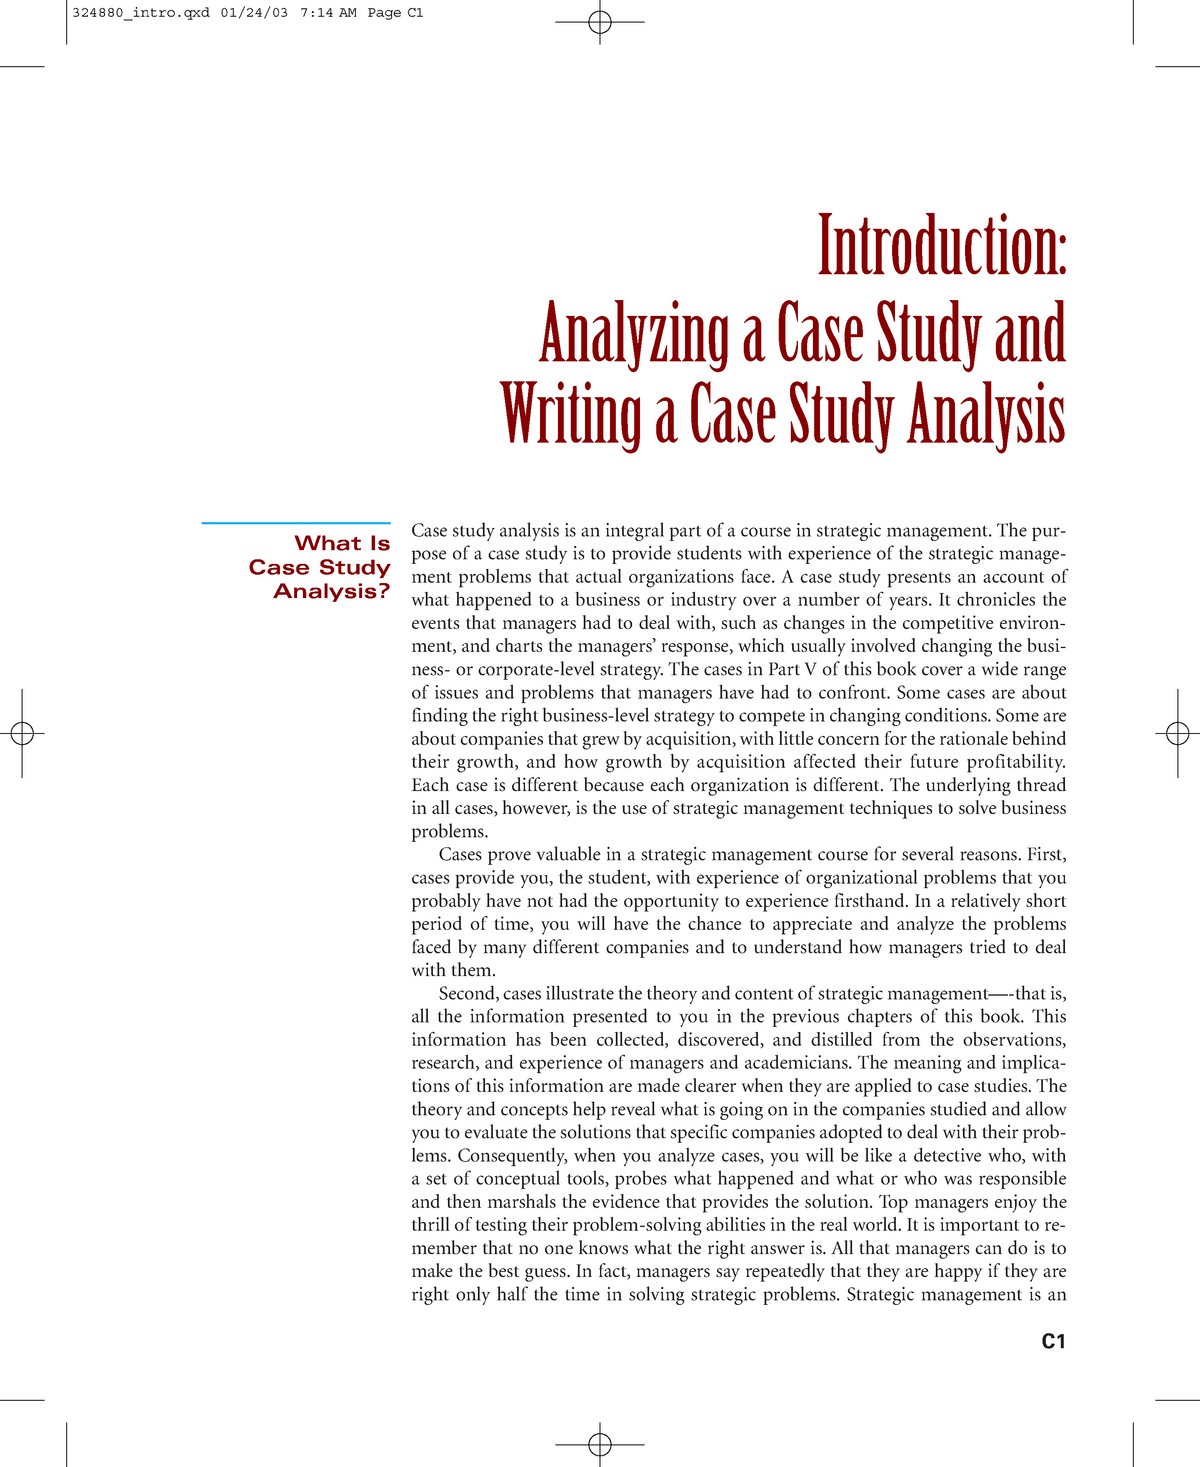 case study video analysis